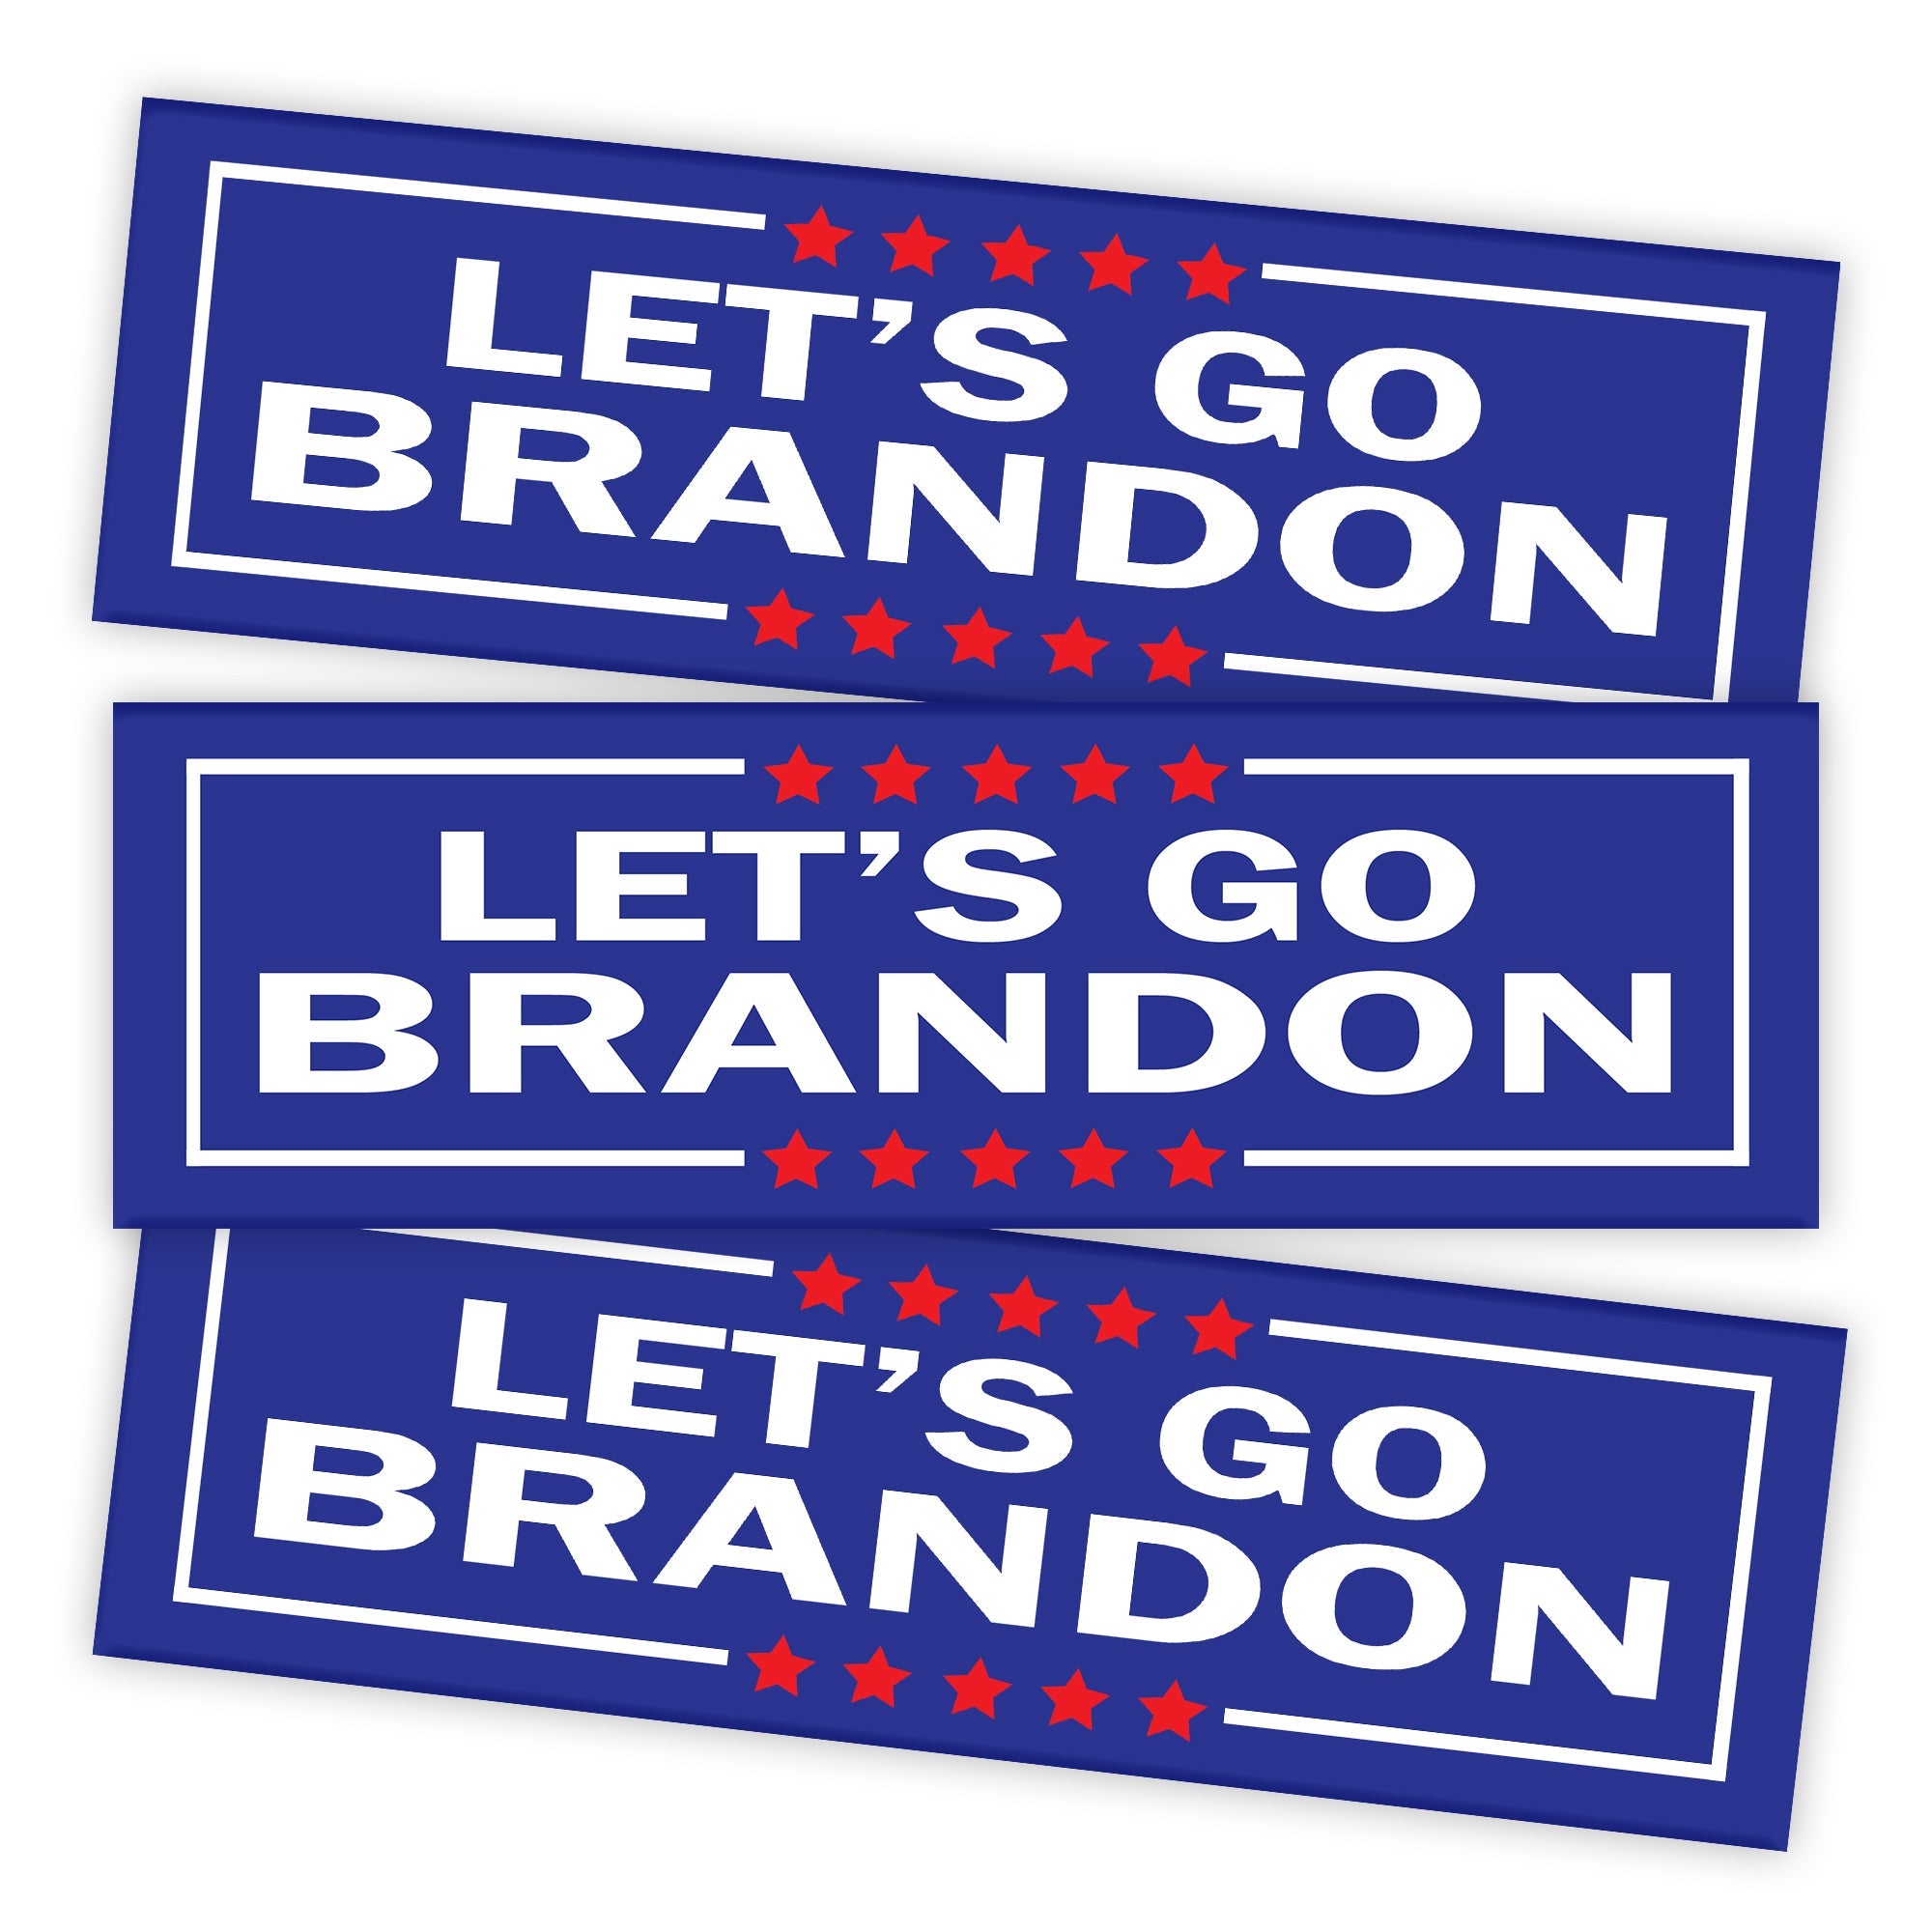 Let's Go Brandon Banners